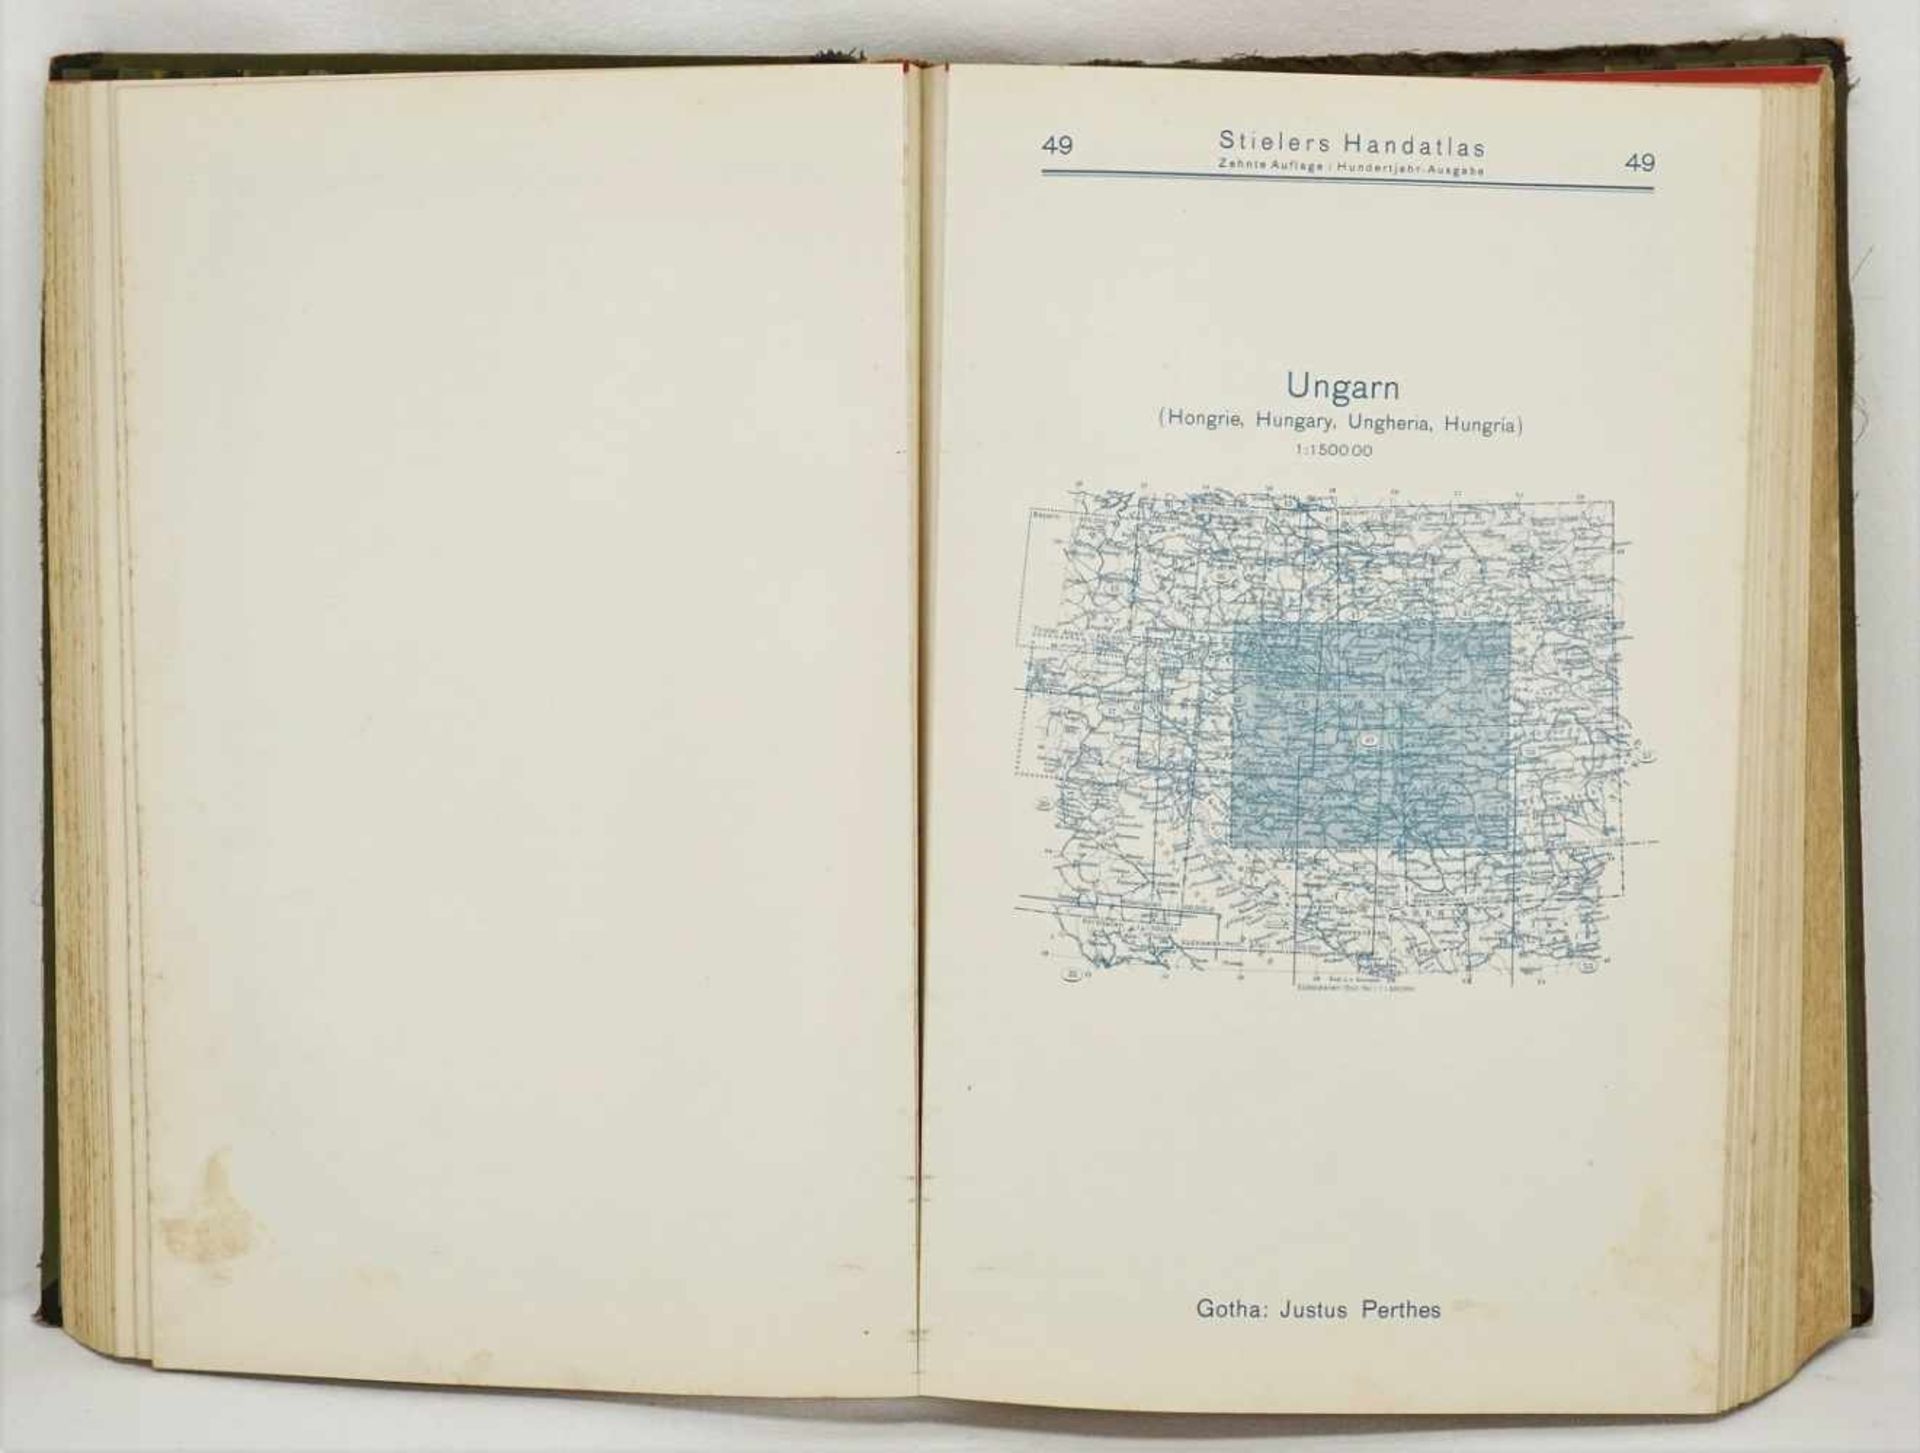 Adolf Stieler, "Stielers Hand-Atlas" - Image 7 of 8